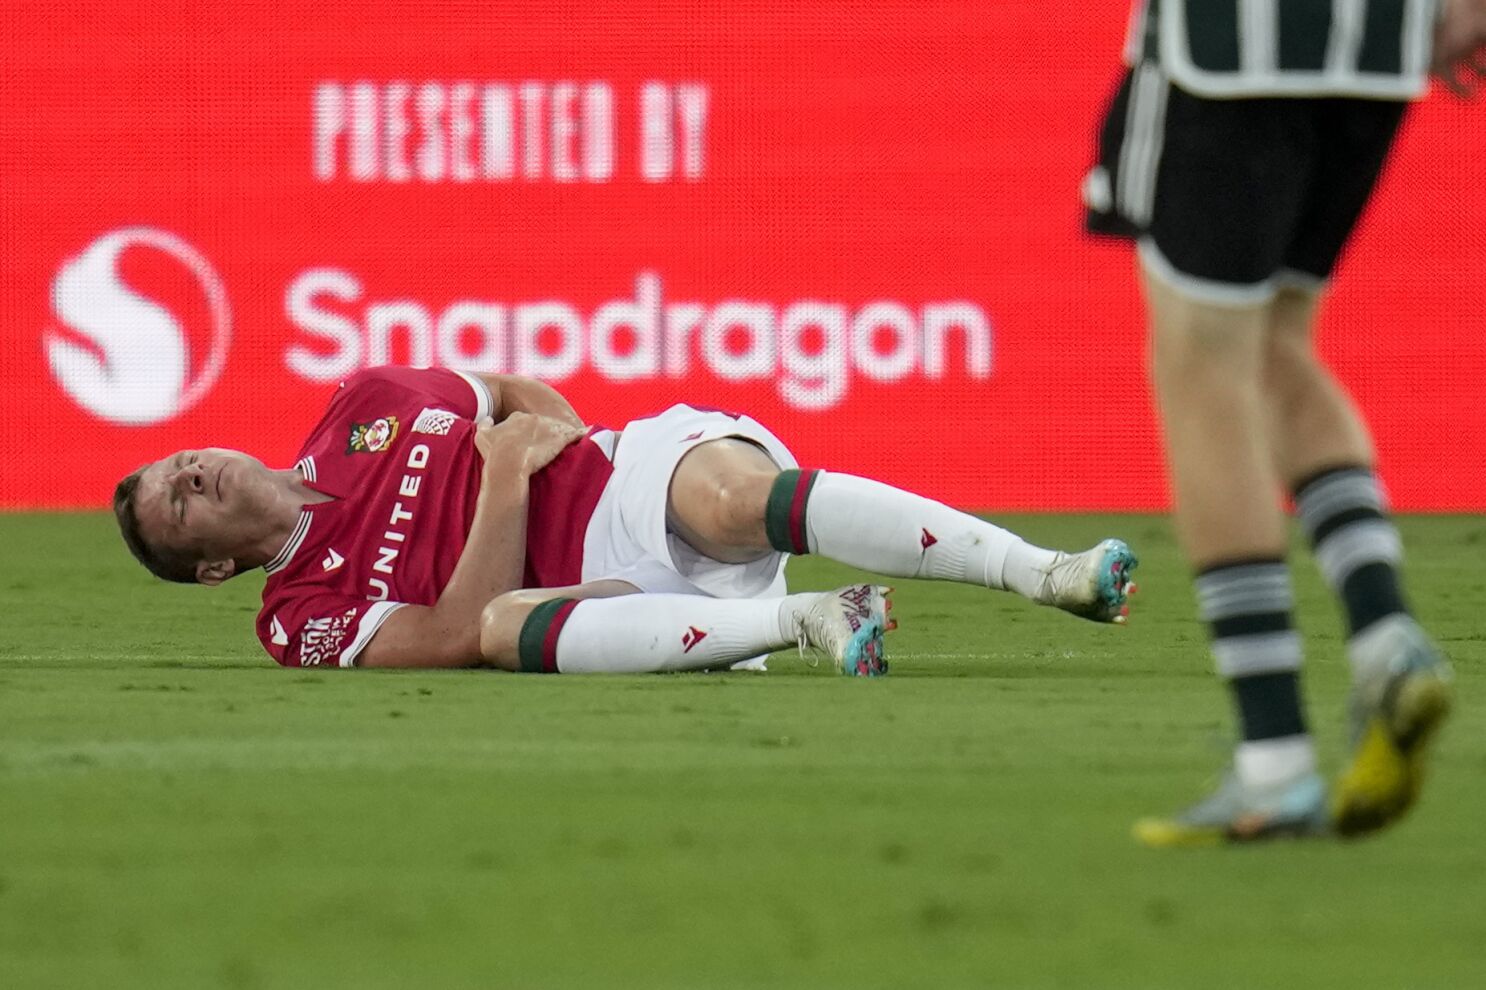 Wrexham striker Paul Mullin injured in collision with Manchester United  goalie Nathan Bishop - The San Diego Union-Tribune